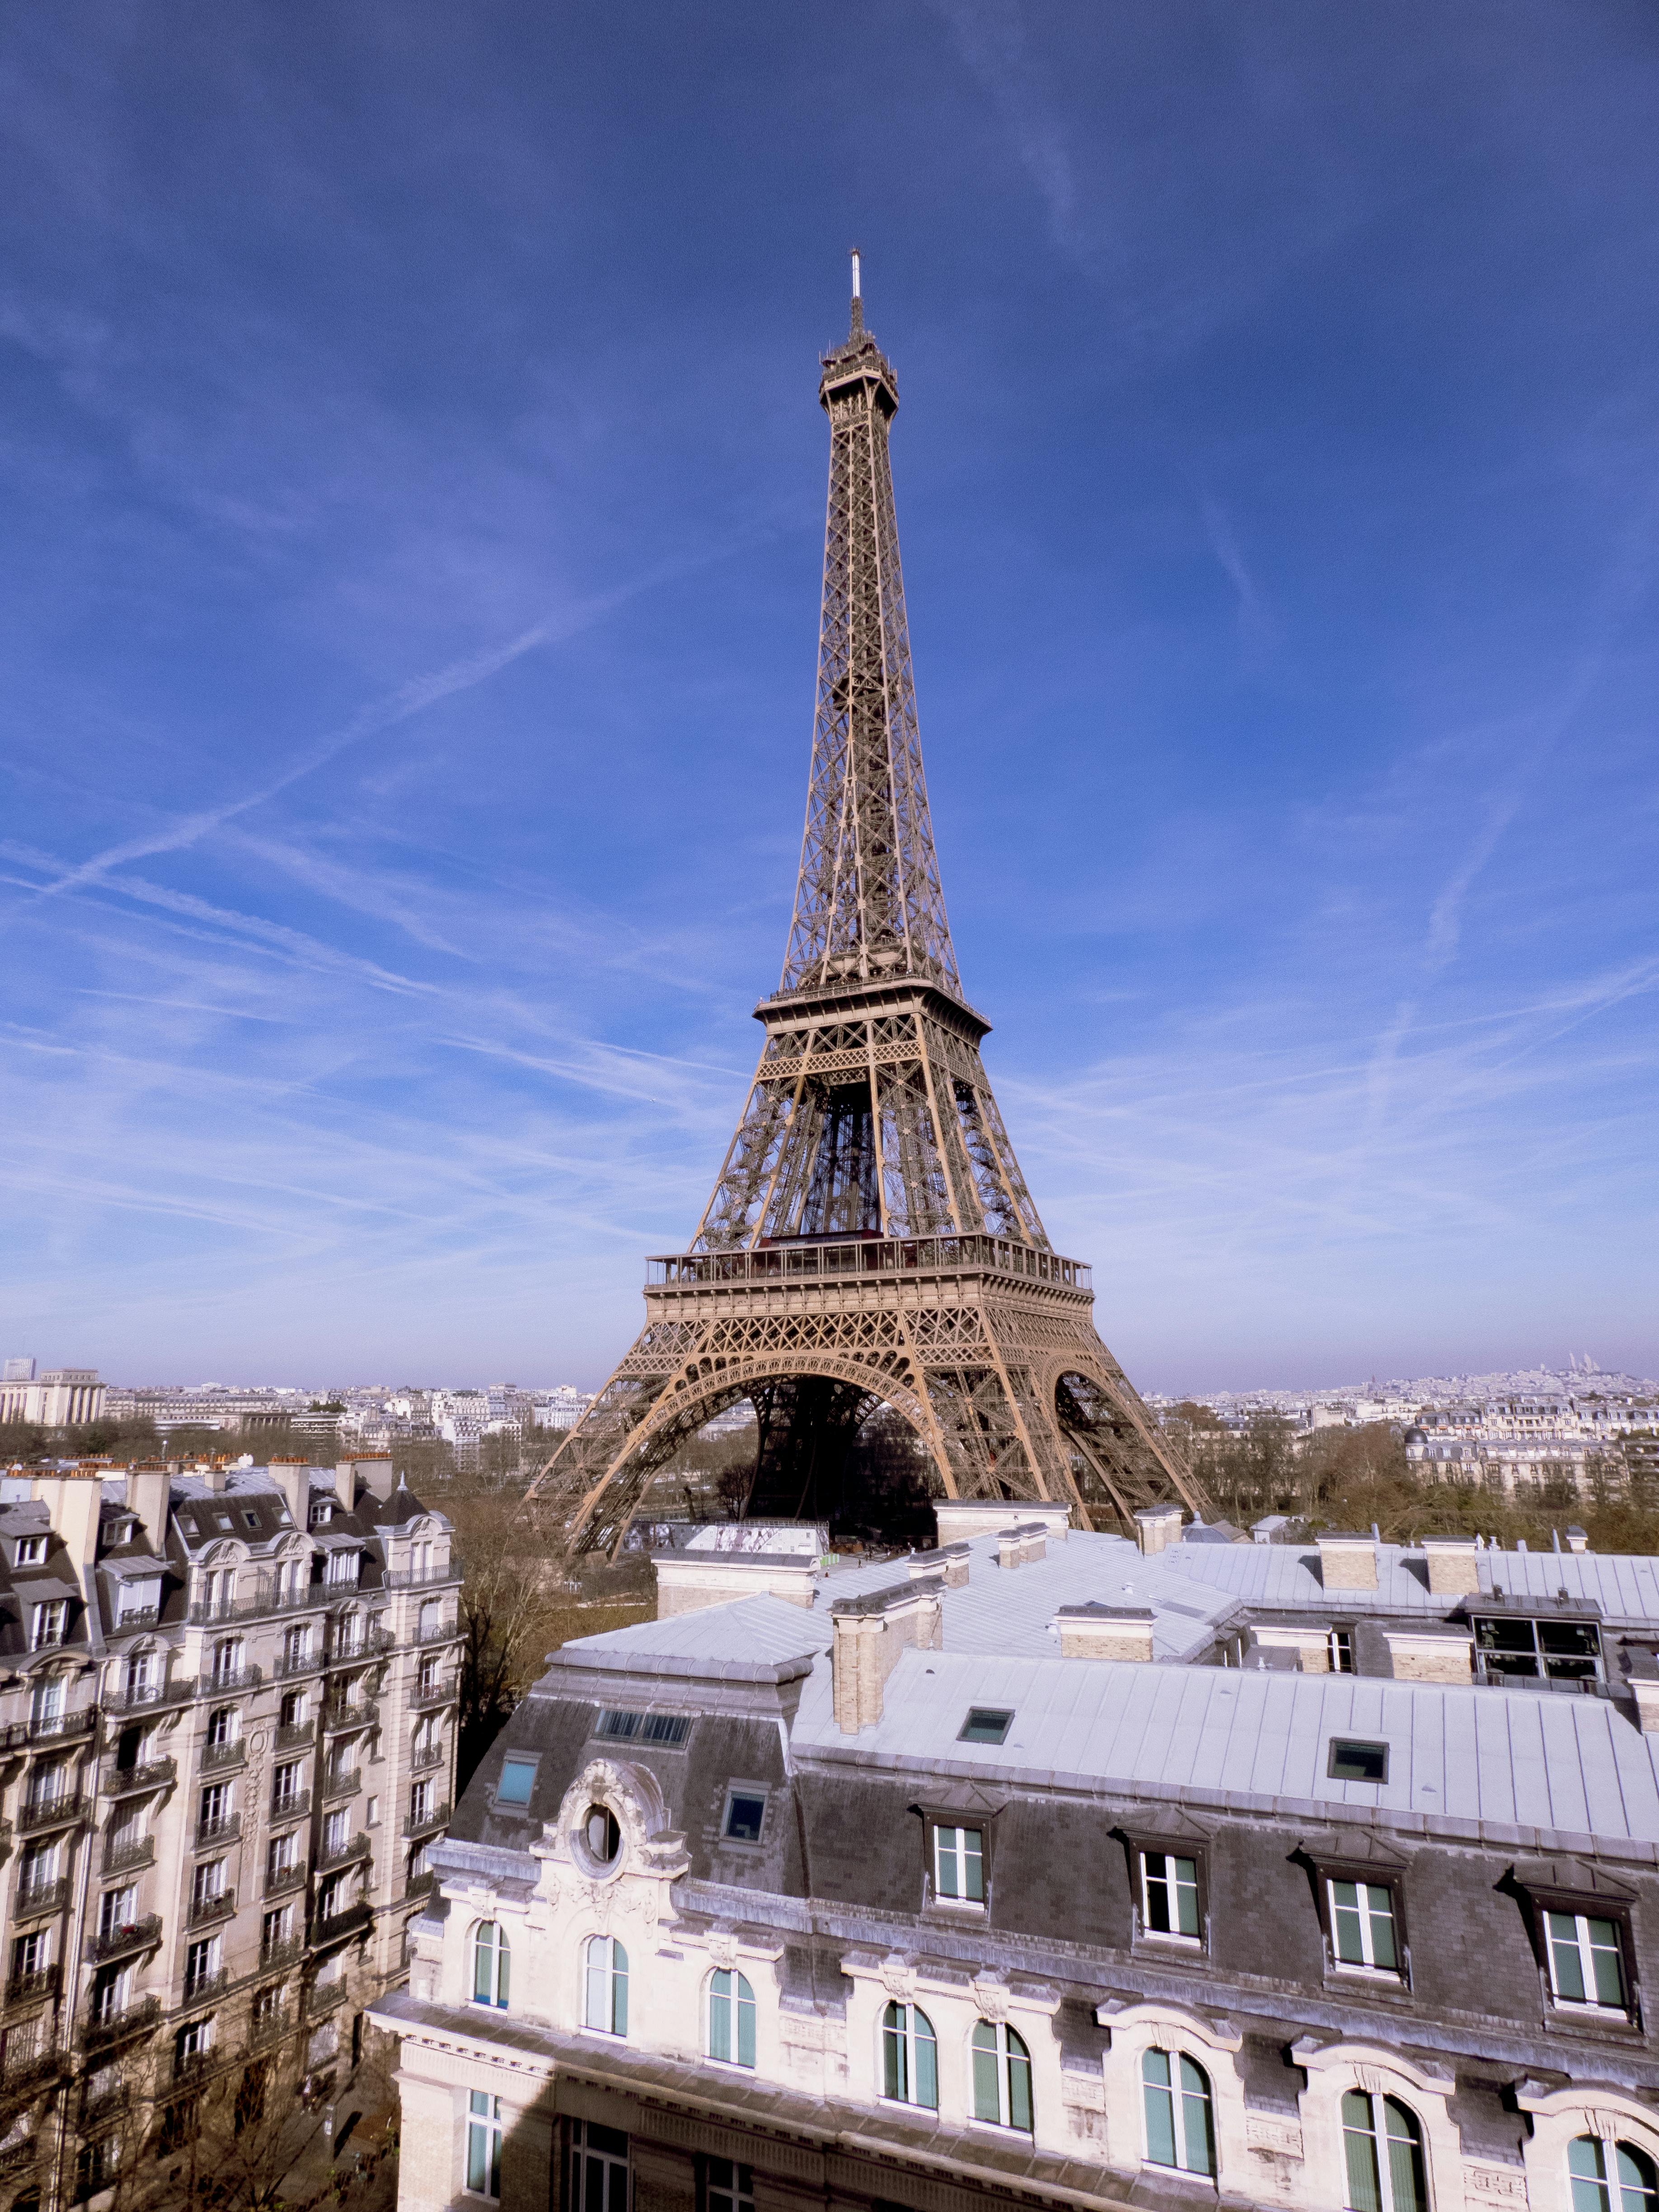 Eiffel Tower · Free Stock Photo